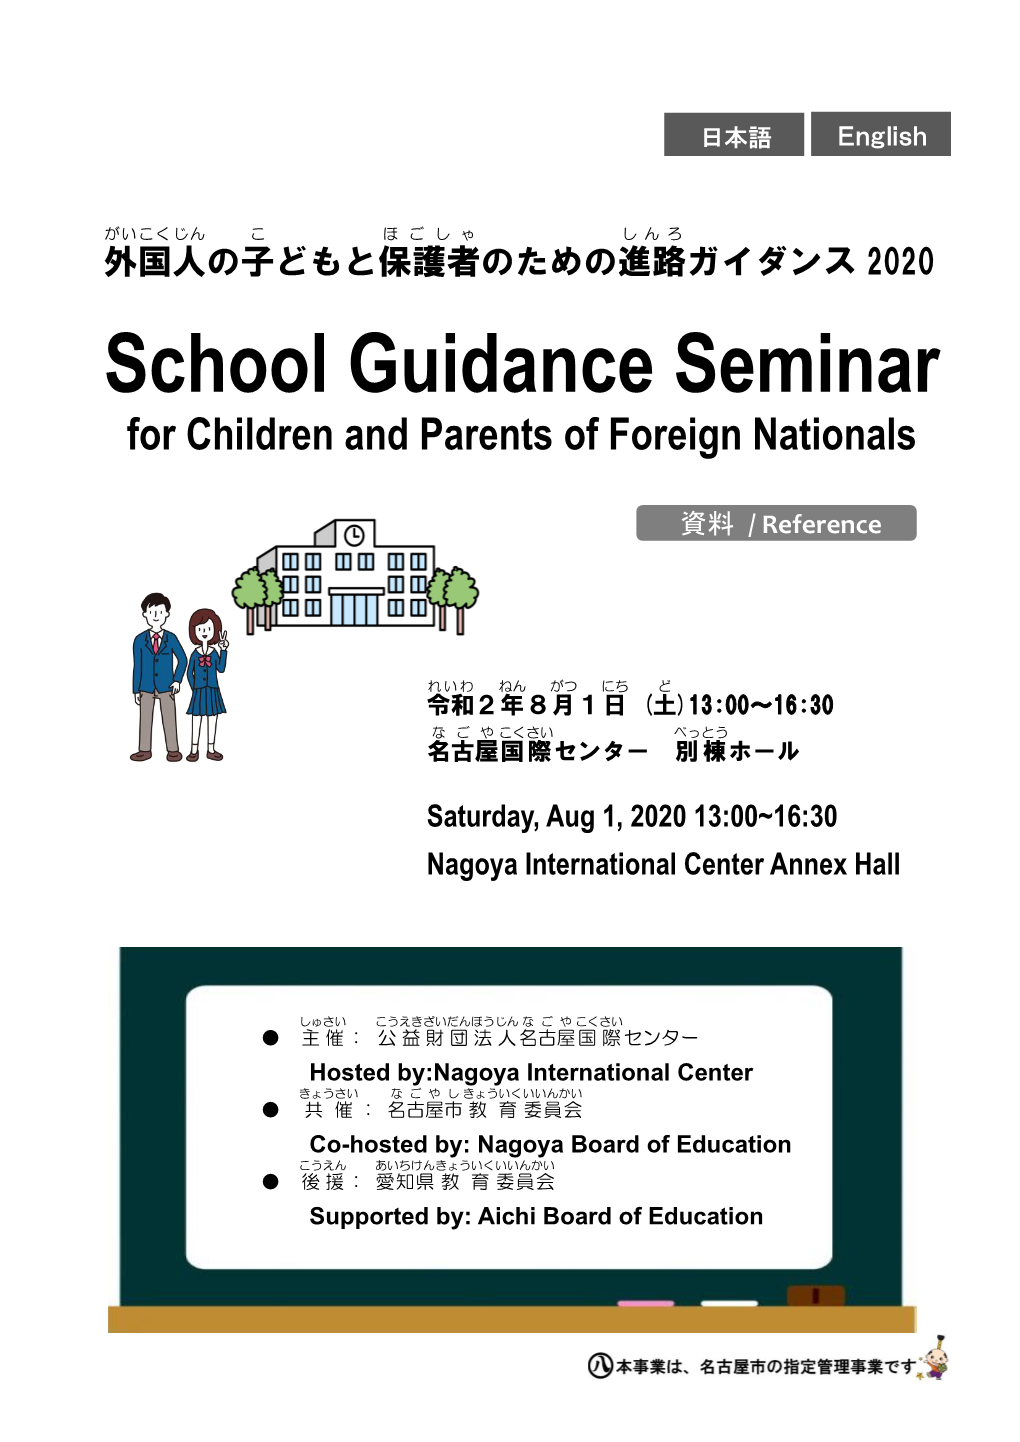 School Guidance Seminar